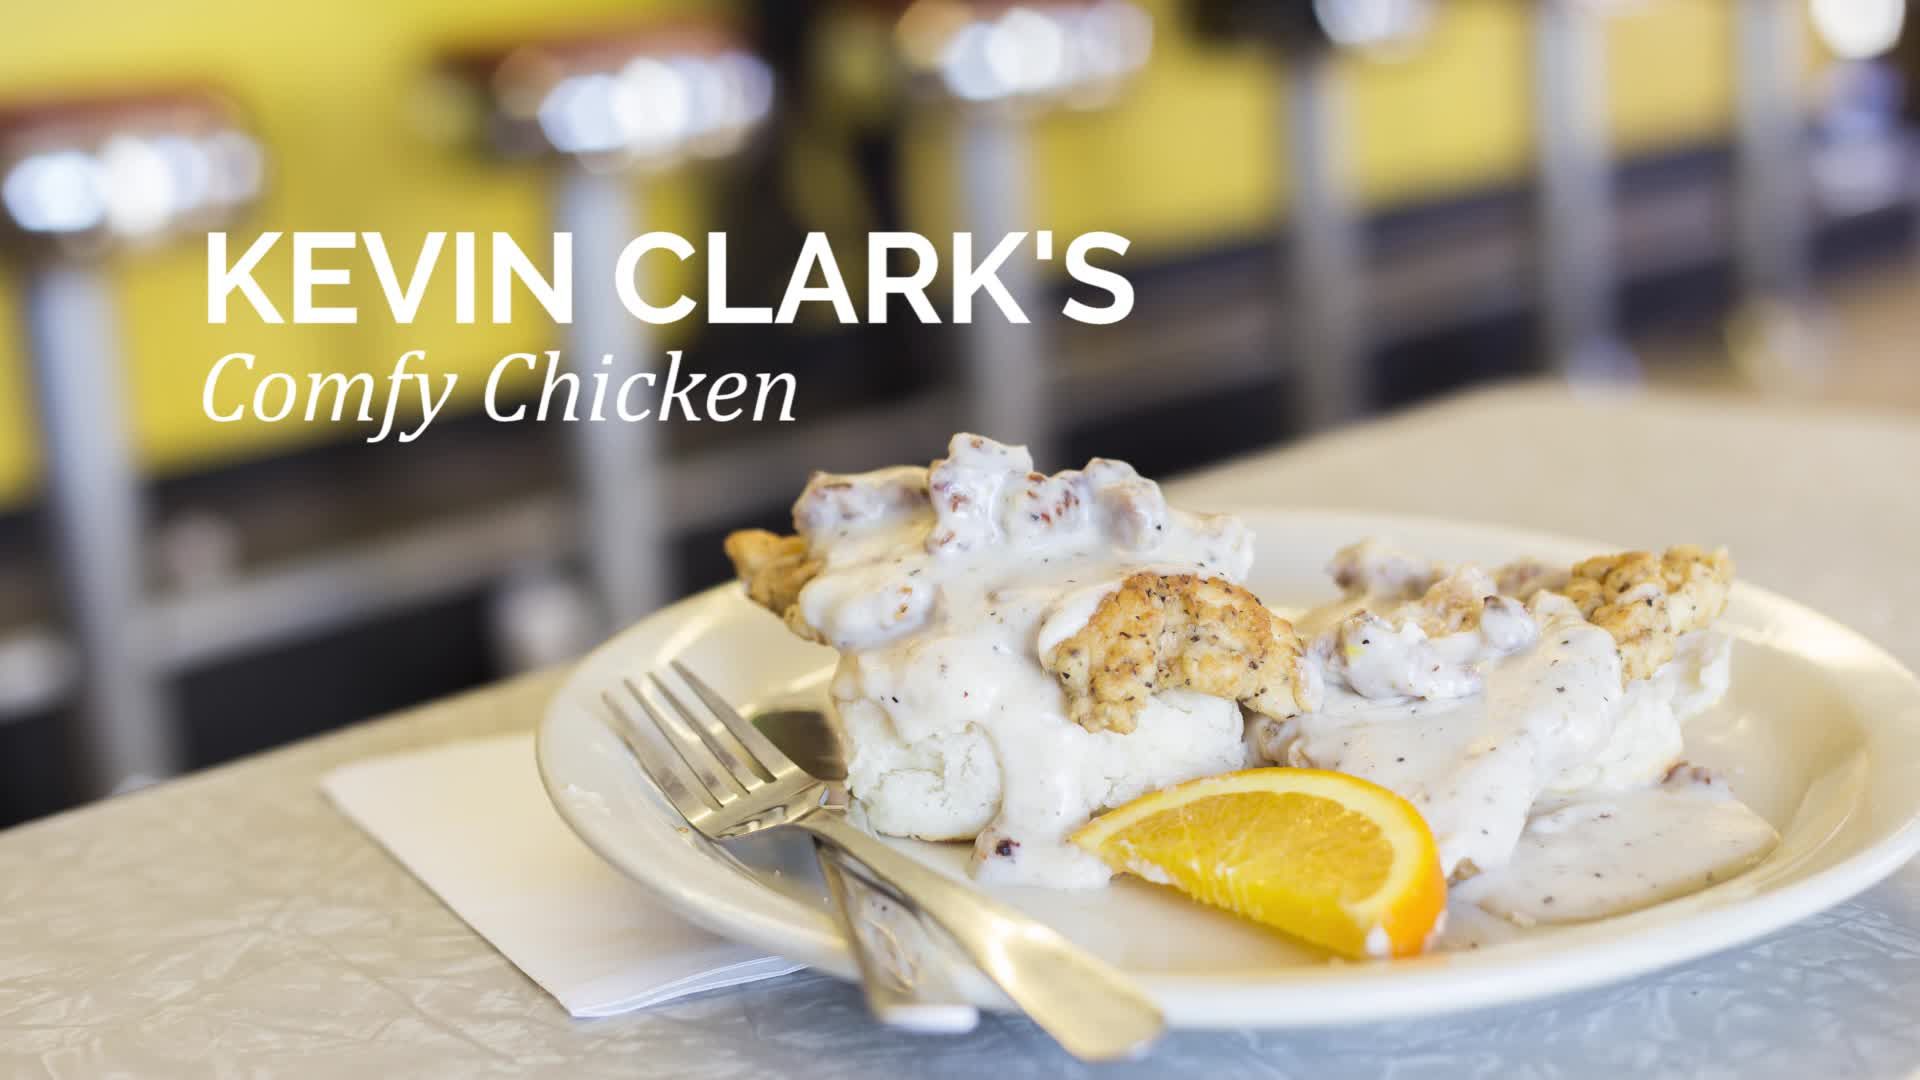 Kevin Clark's Comfy Chicken